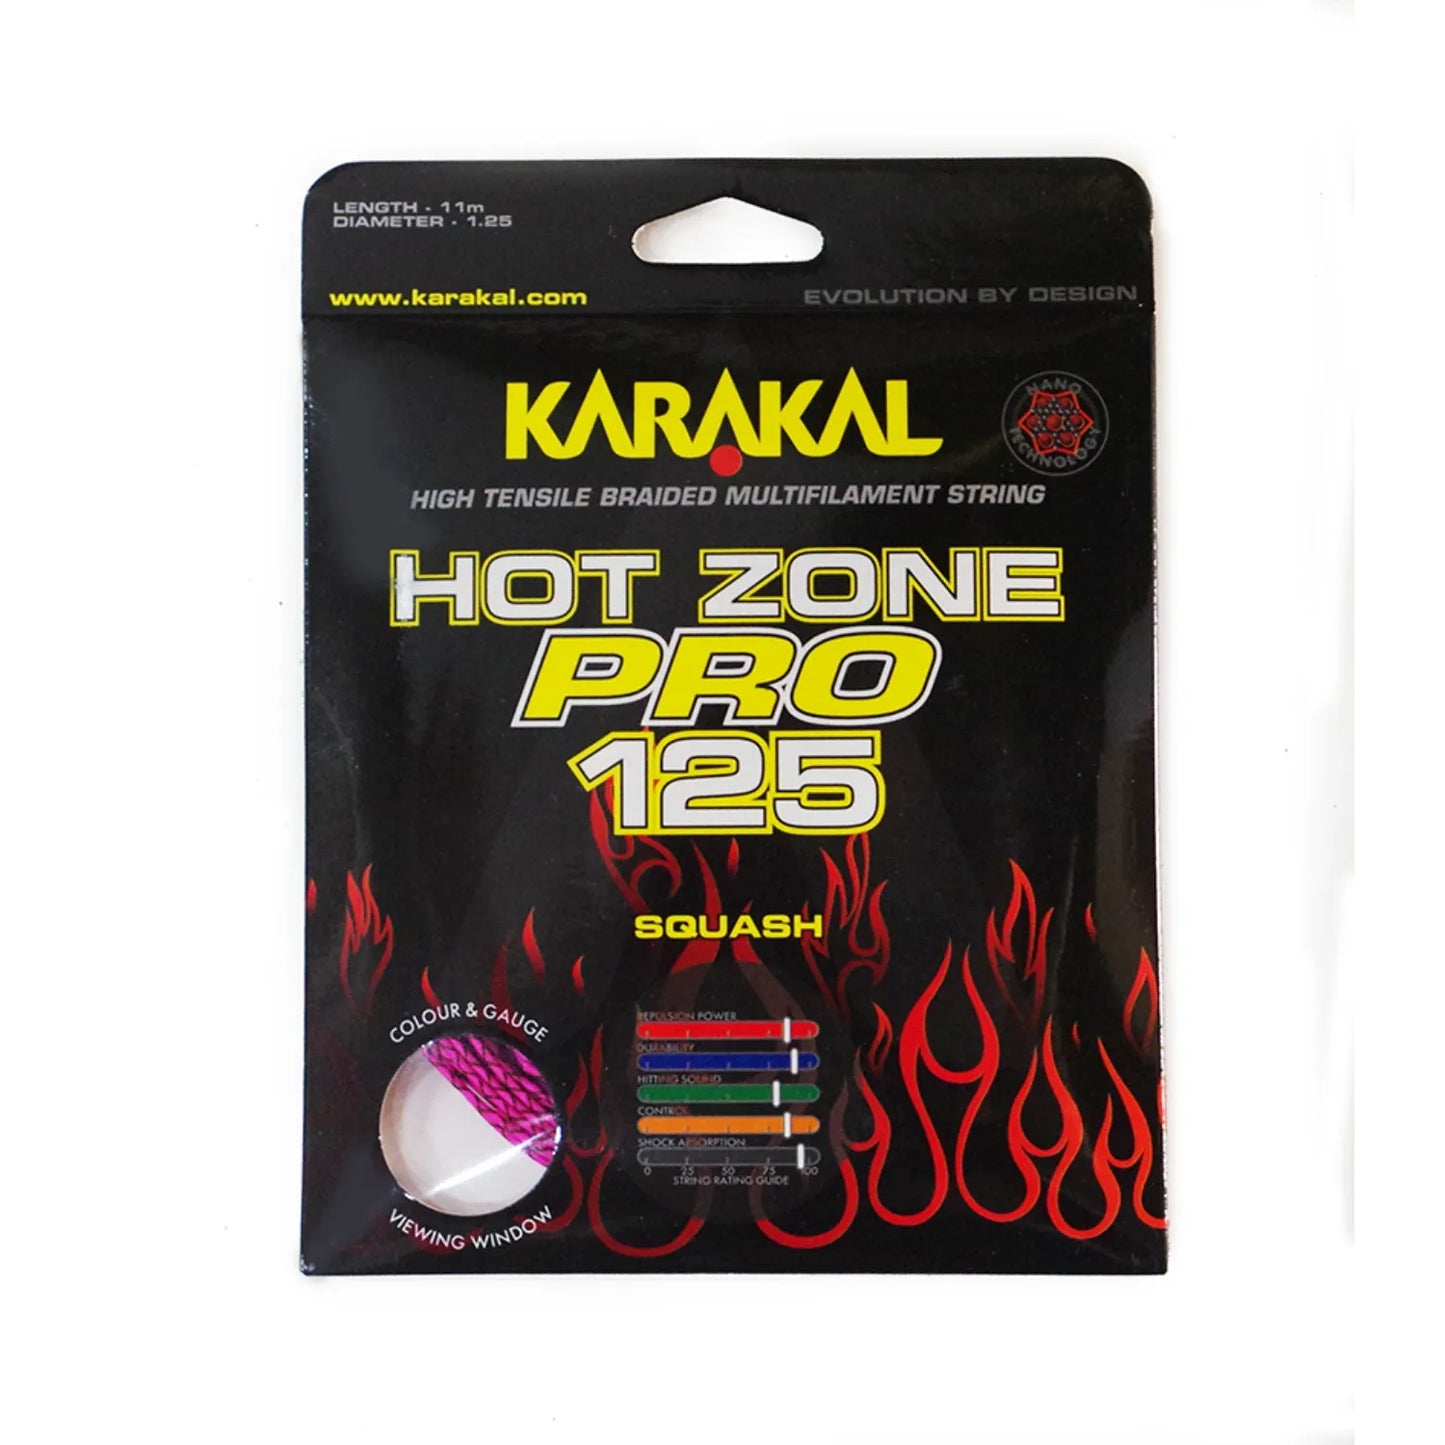 Karakal Hot Zone Pro 125 Squash String